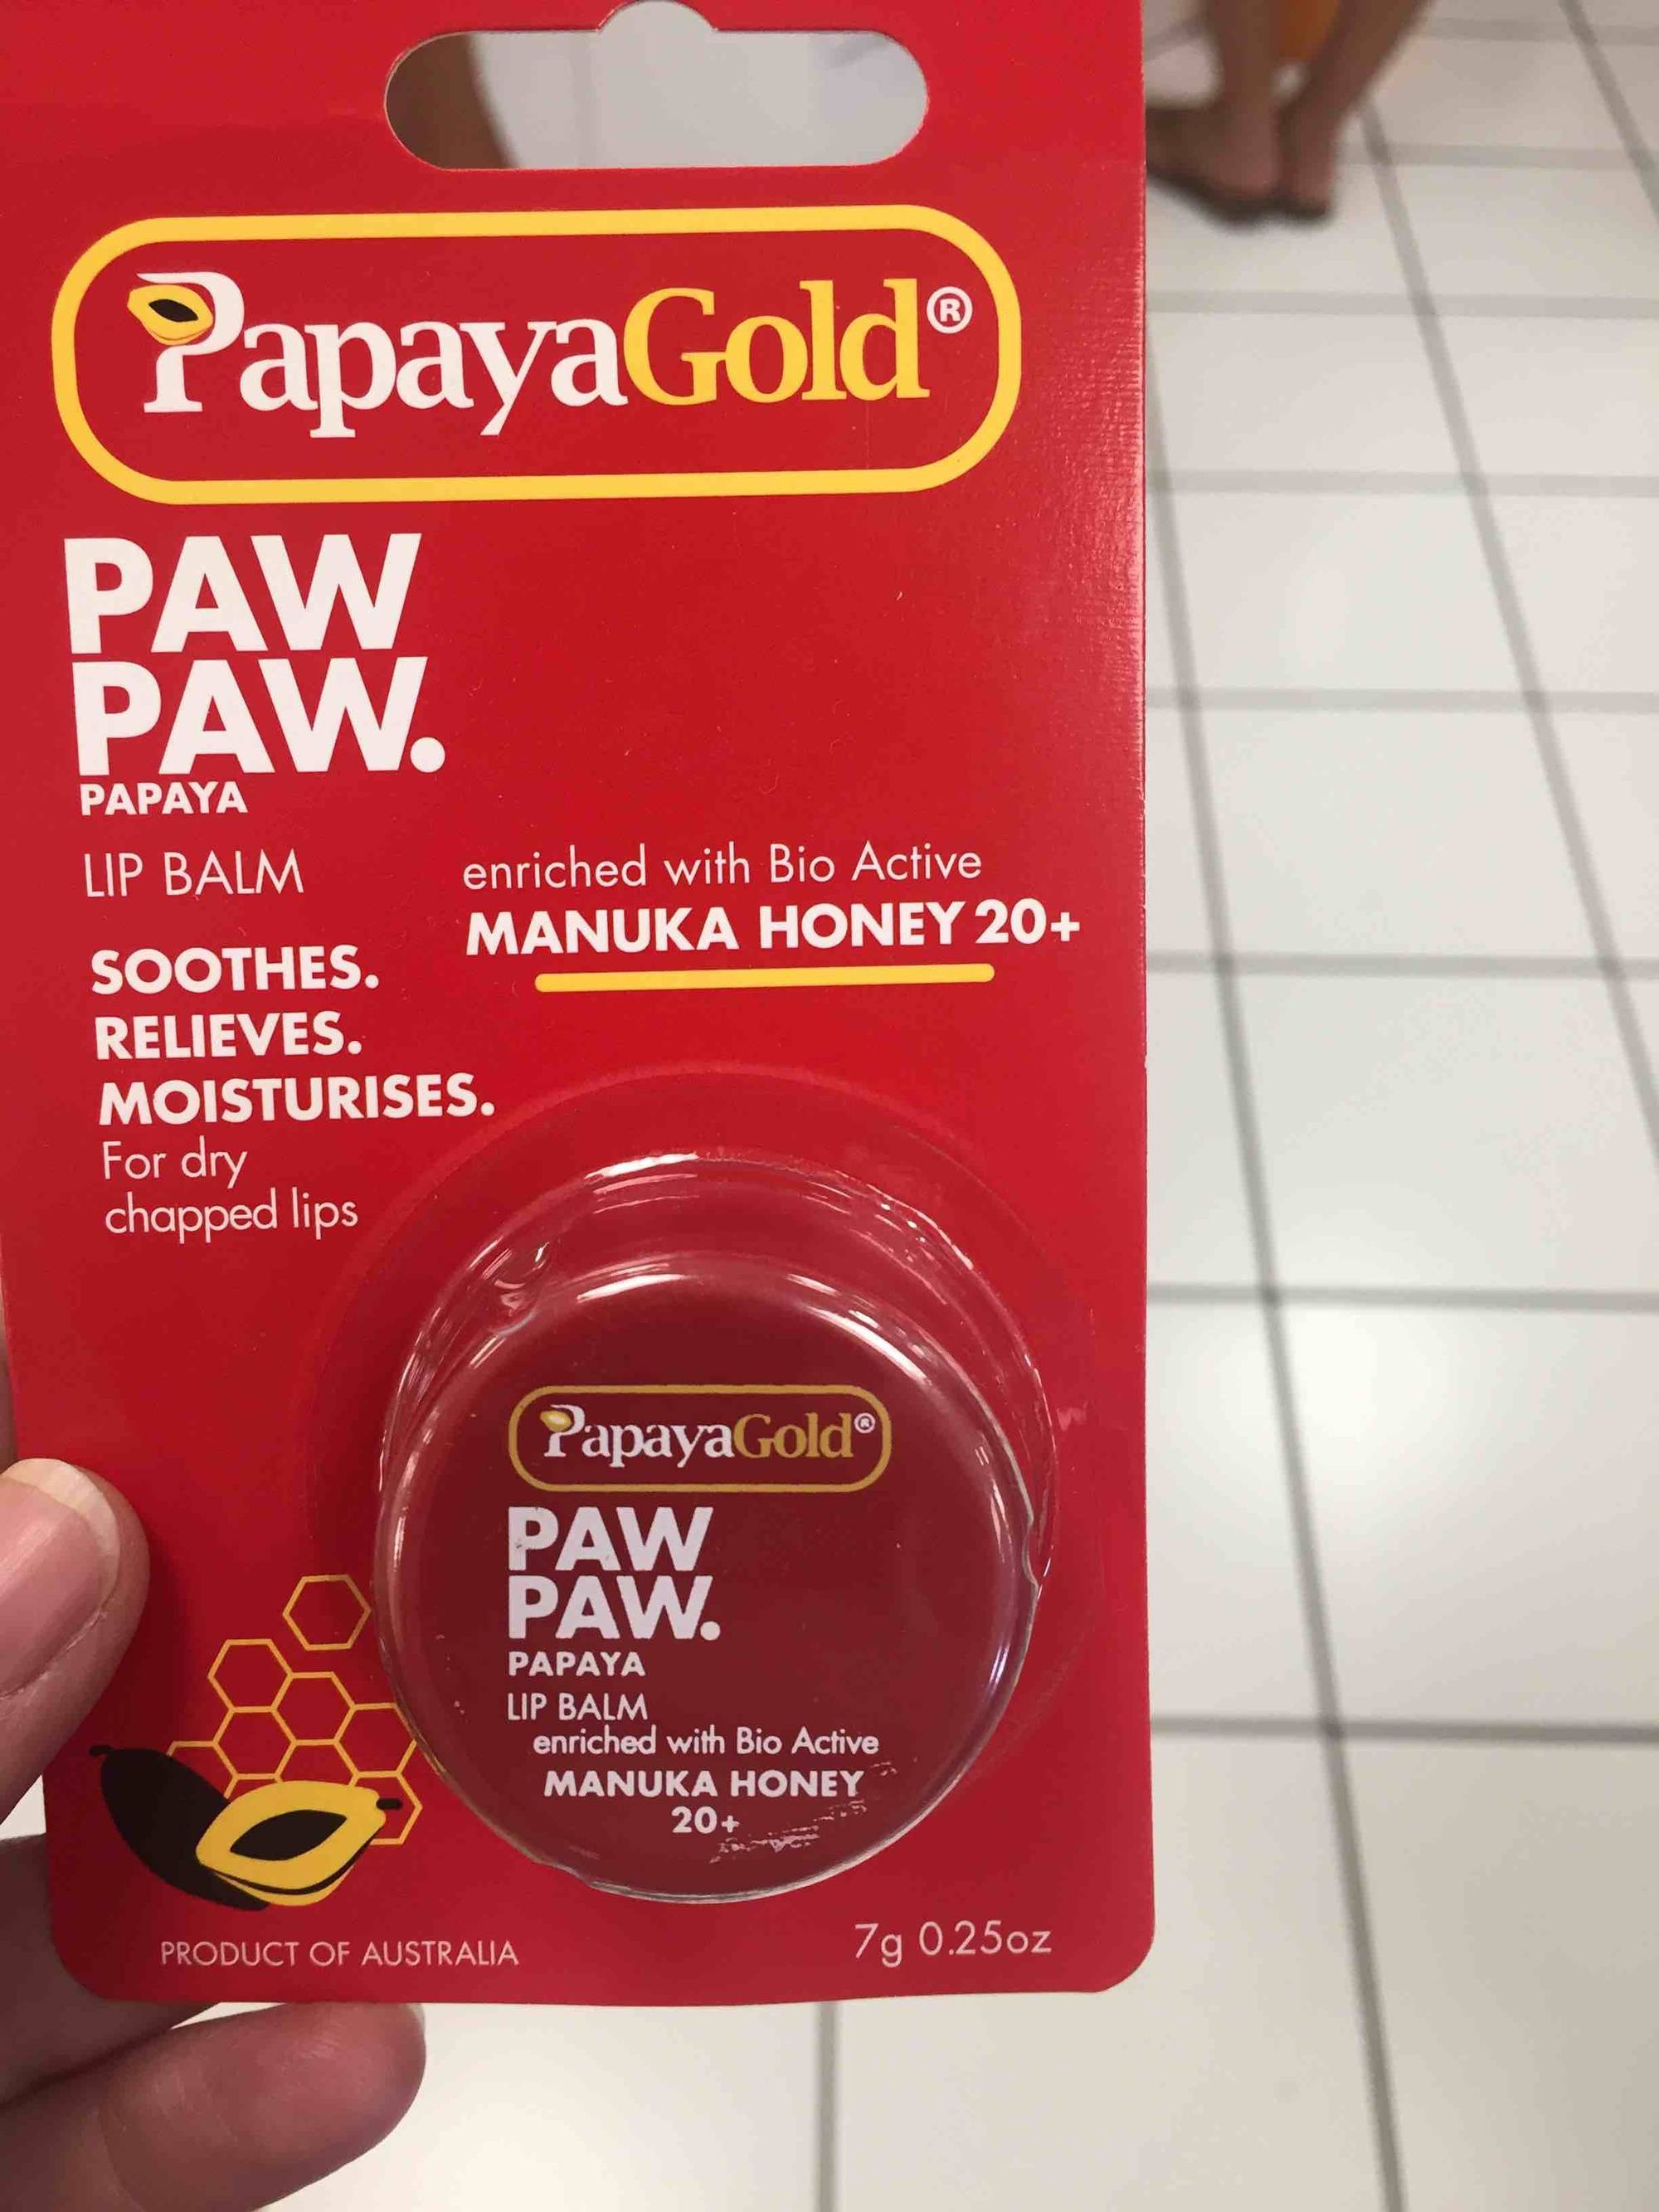 PAPAYA GOLD - Paw paw papaya - Lip balm